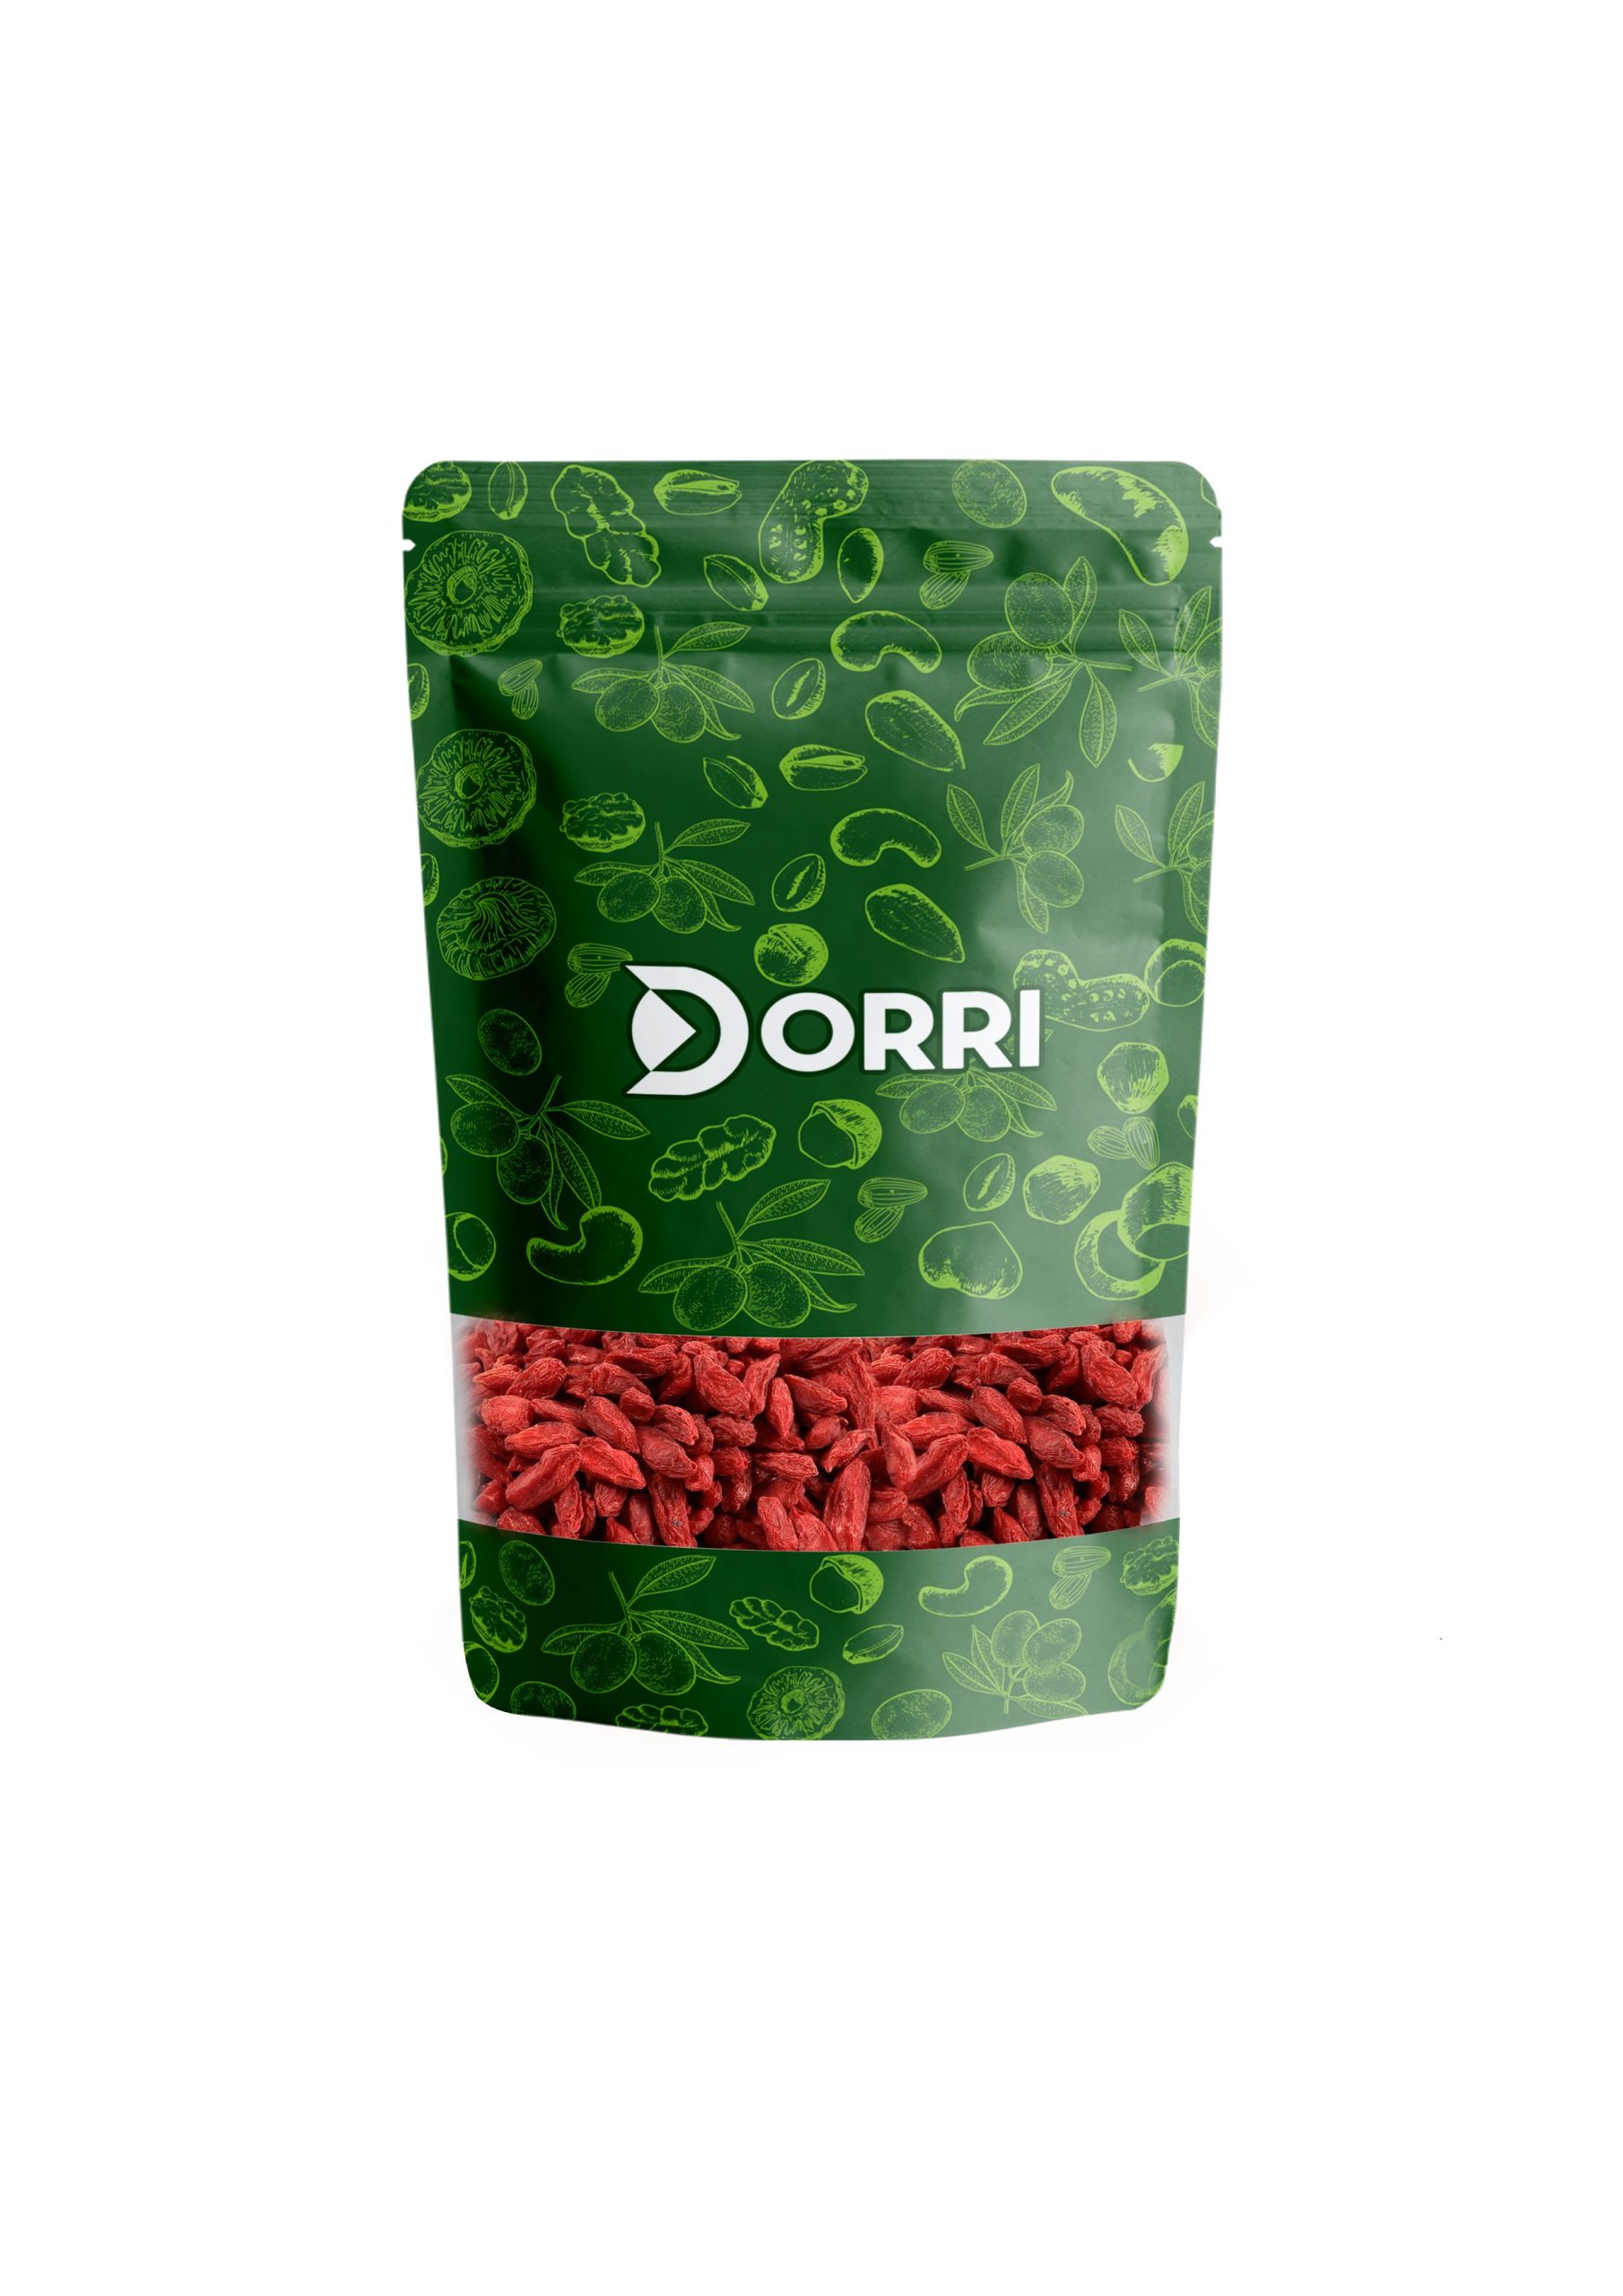 Dorri - Dried Goji Berries